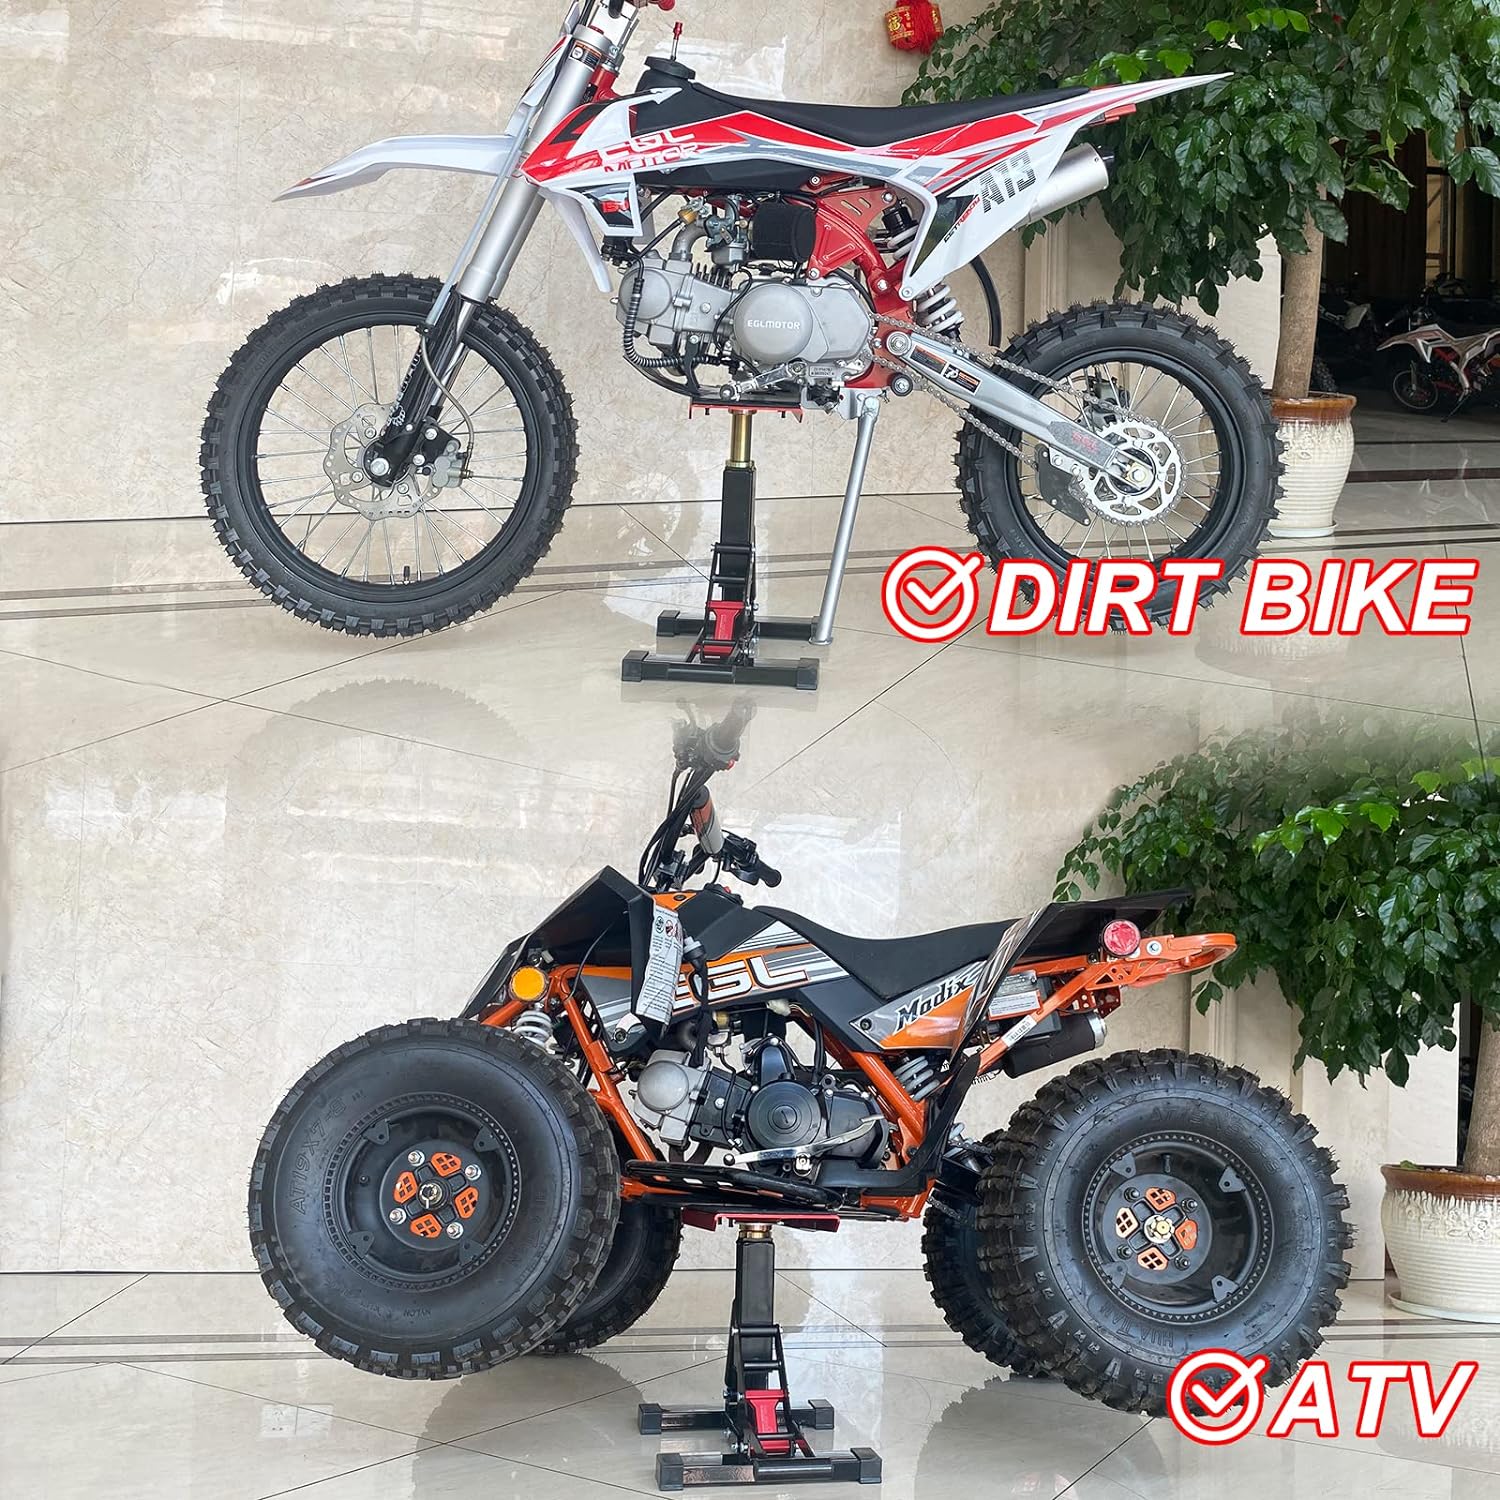 PolarBear Dirt Bike Stand Hydraulic Jack Vertical Lift CNC, for Dirt Bike/ATV/ADV/Rally Maintenance, Motorcycle Dirtbike Engine Stand wit